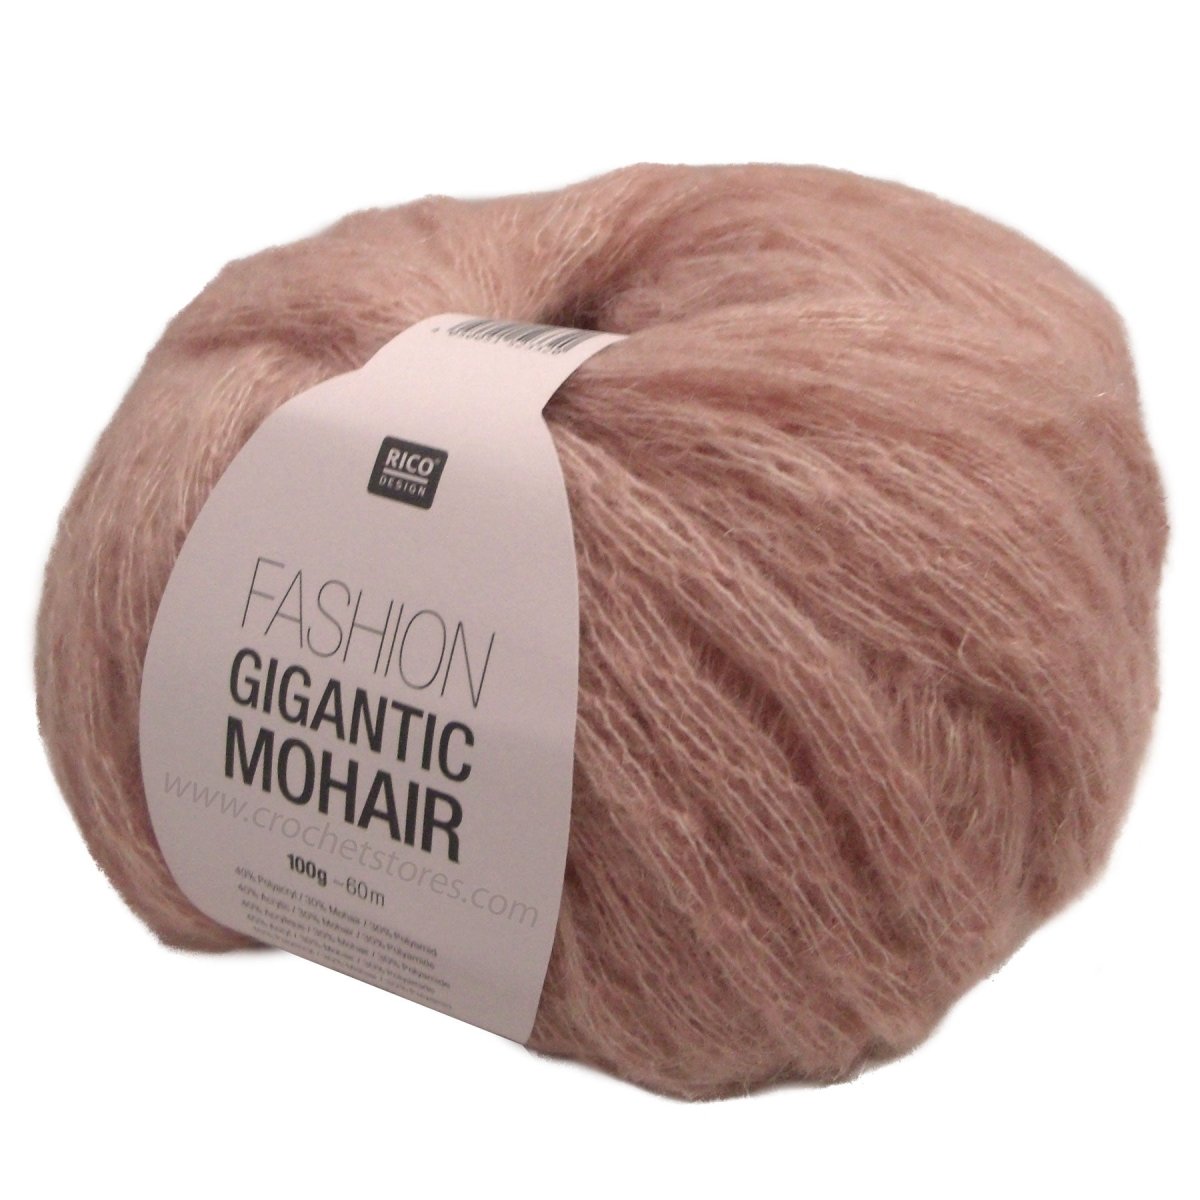 FASHION GIGANTIC MOHAIR - Crochetstores383090-0034050051523320